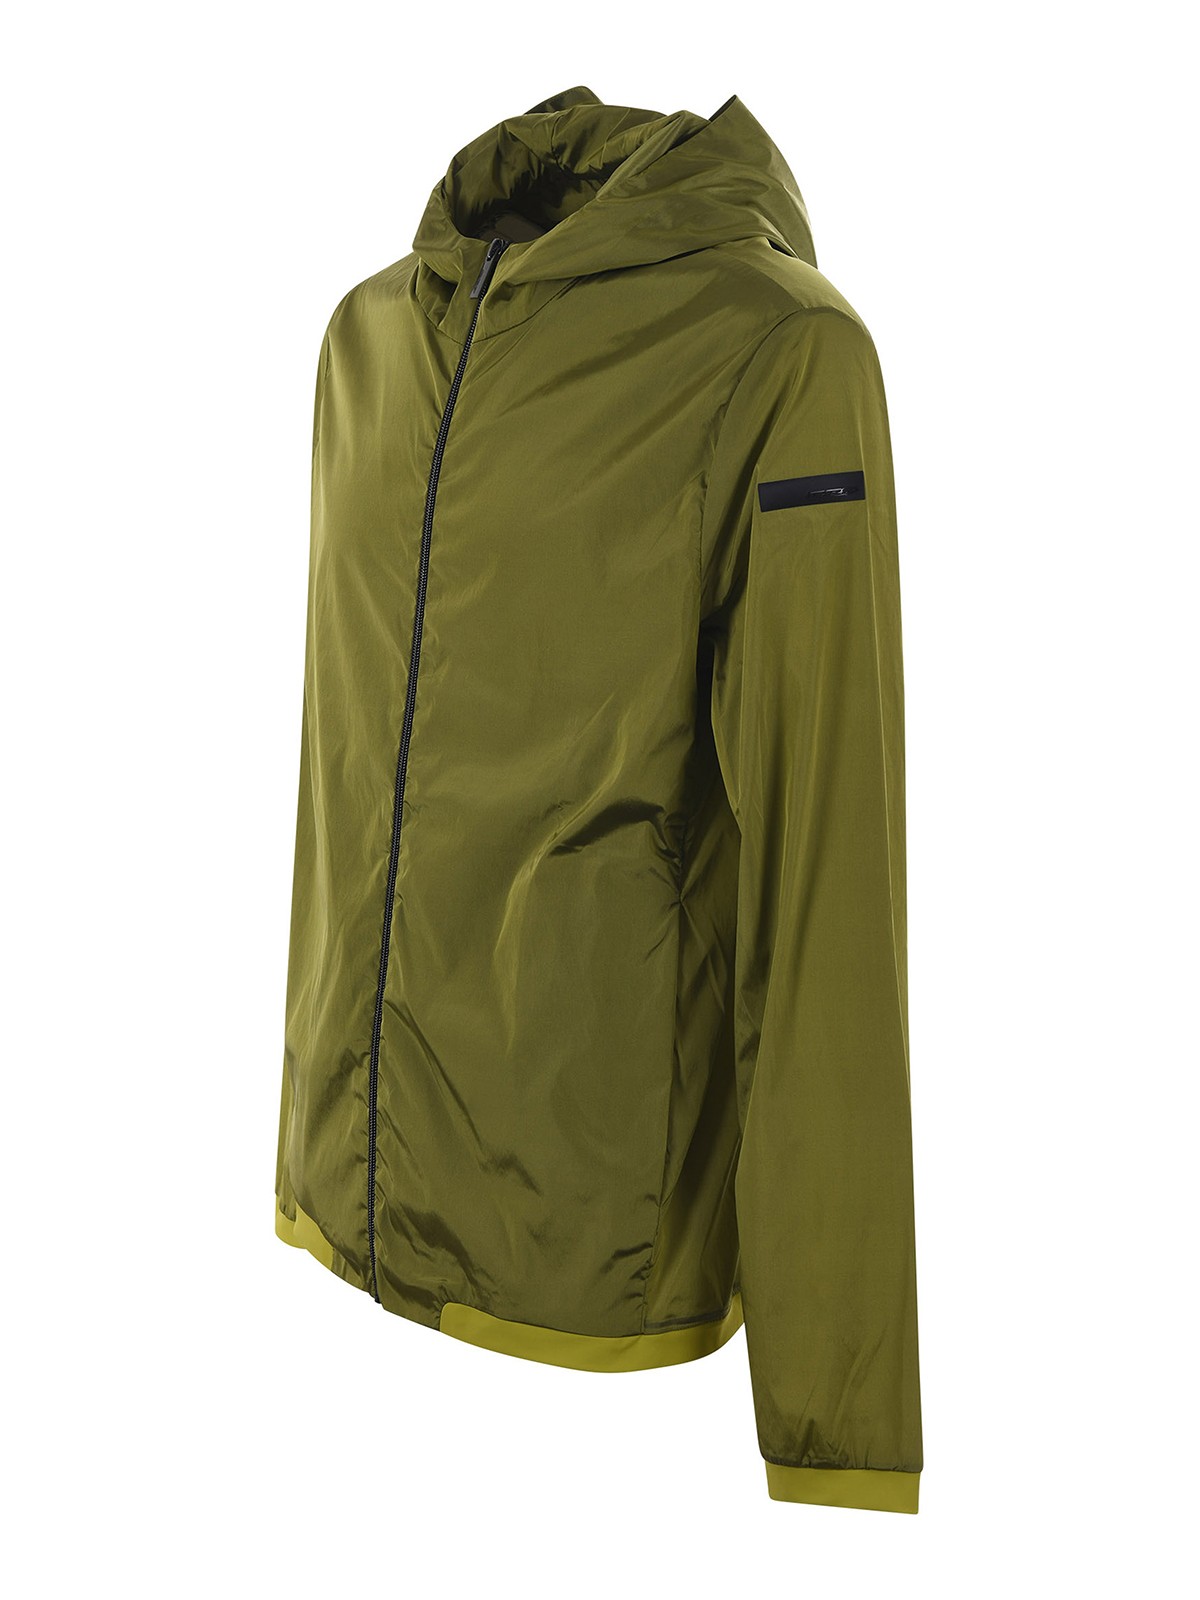 Shop Rrd Roberto Ricci Designs Rrd Jacket  Hyper Hood In Verde